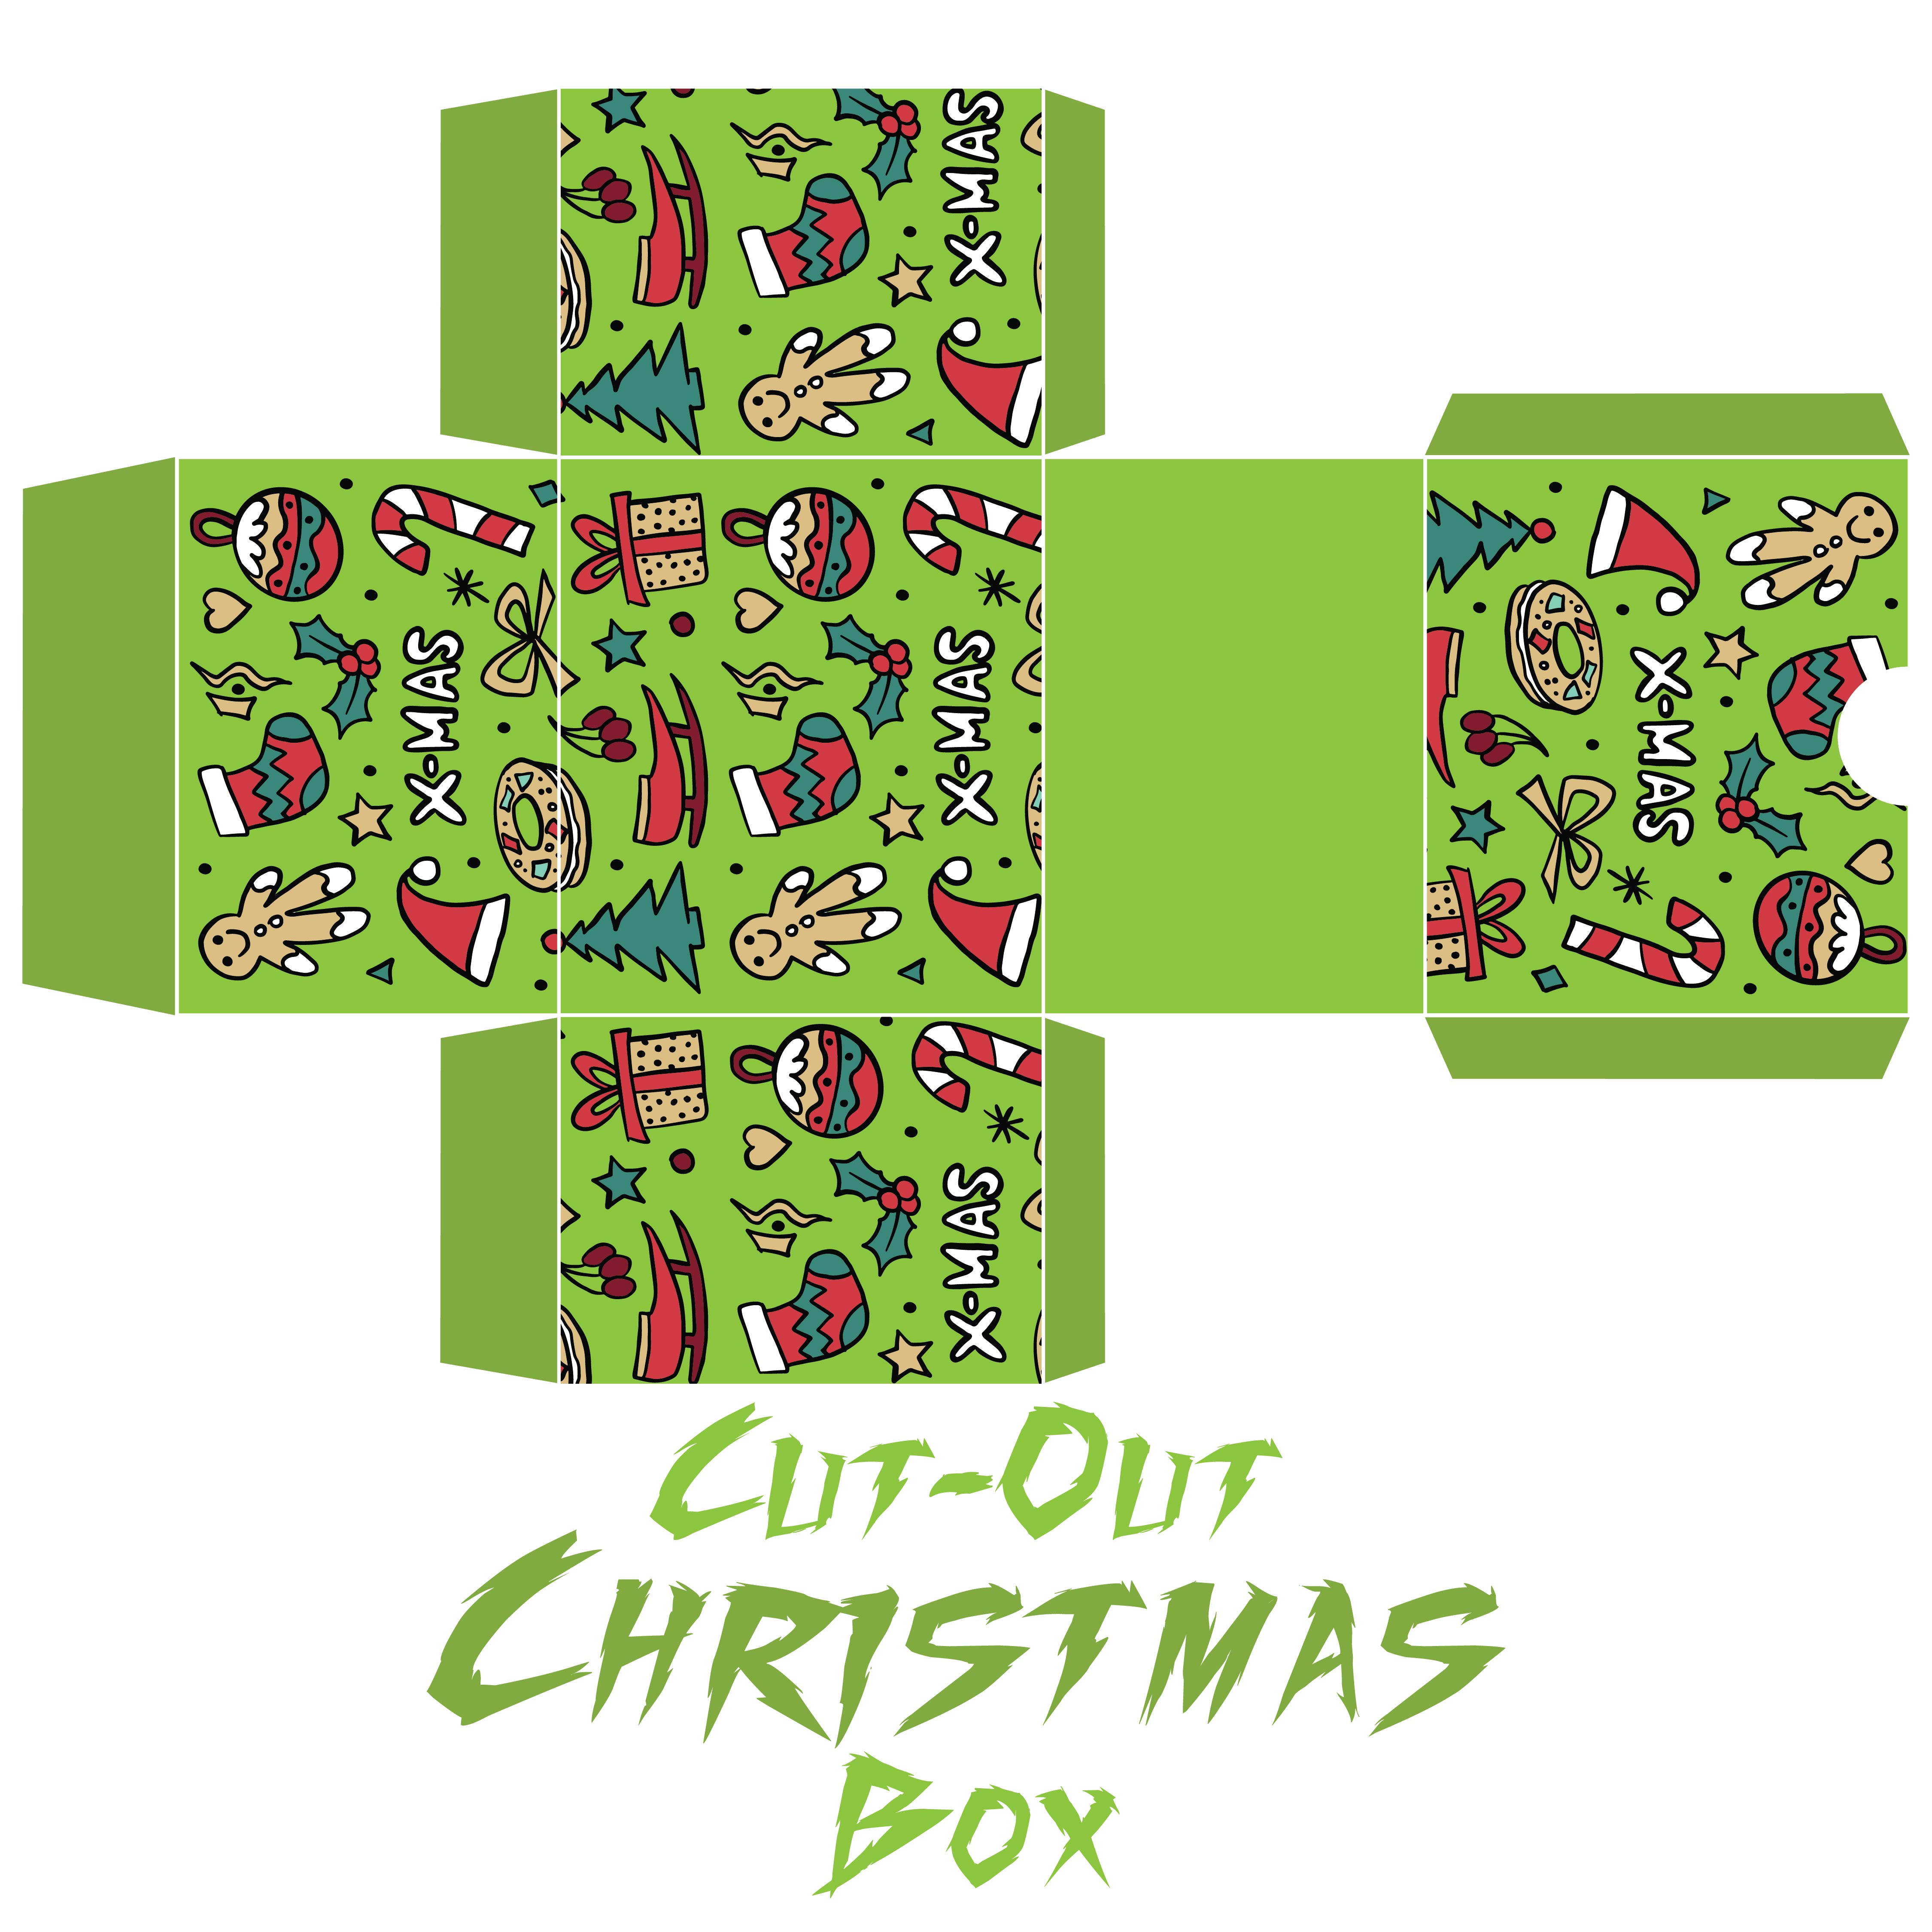 10 Best Free Printable Christmas Gift Box Template - printablee.com